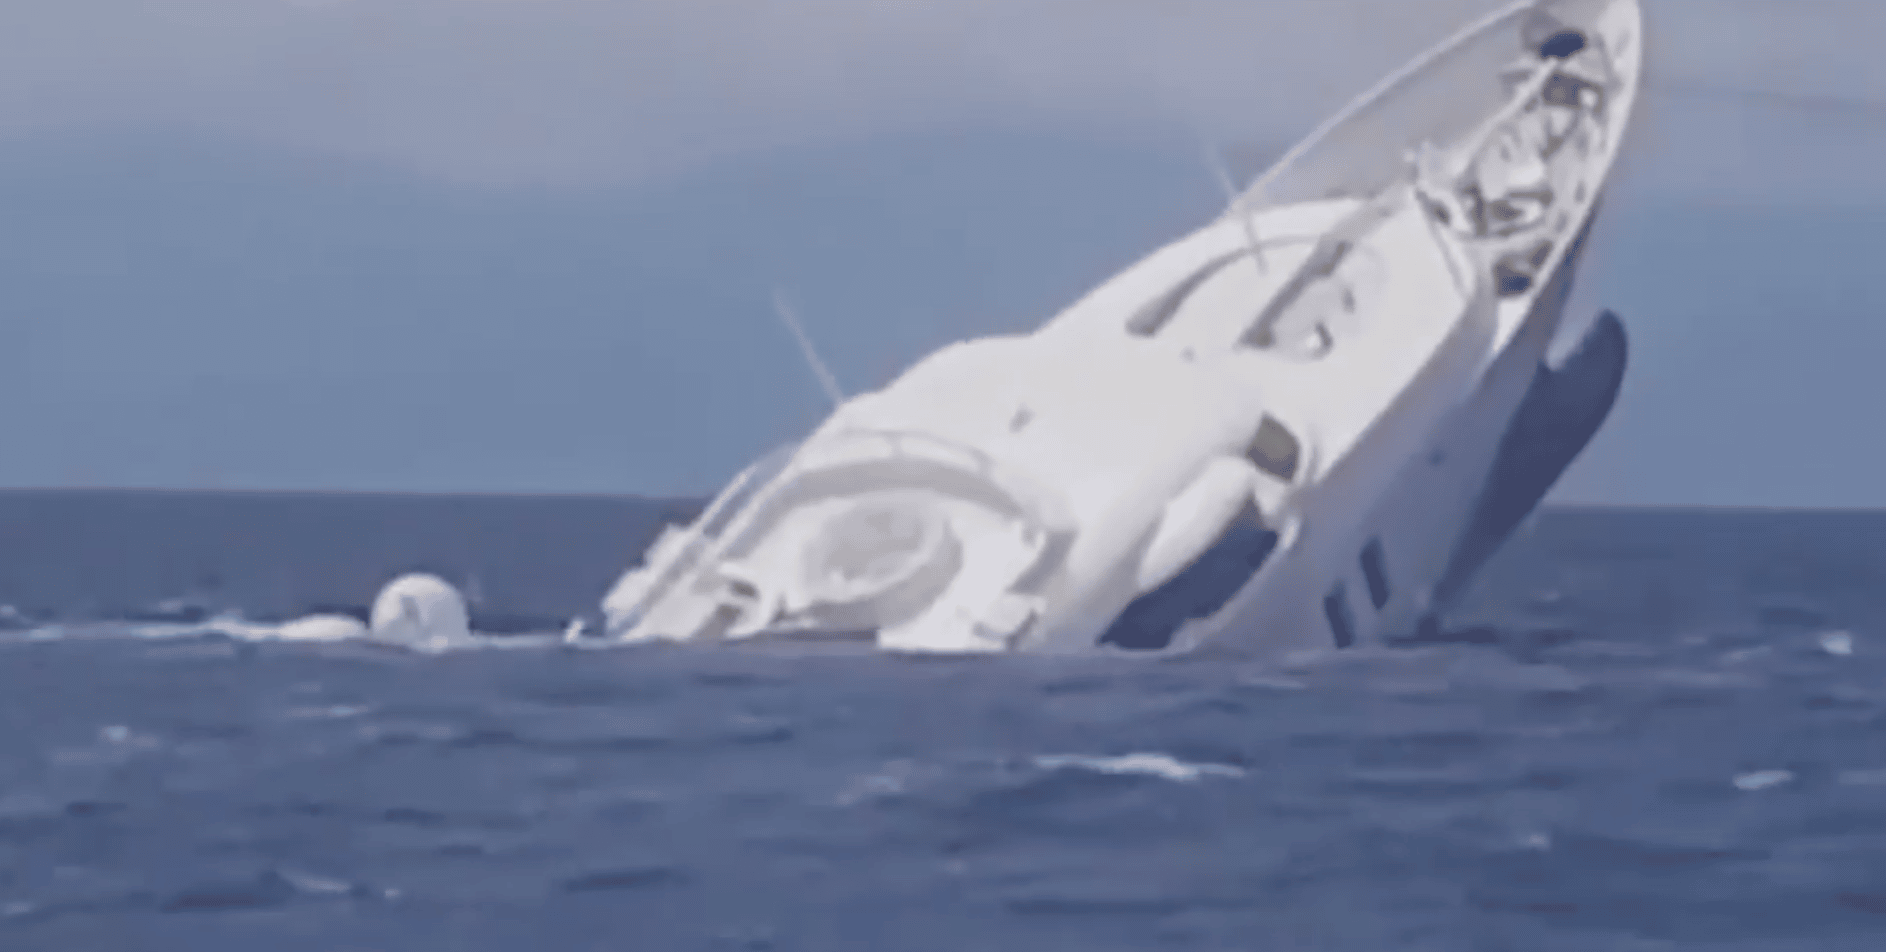 super yachts sinking